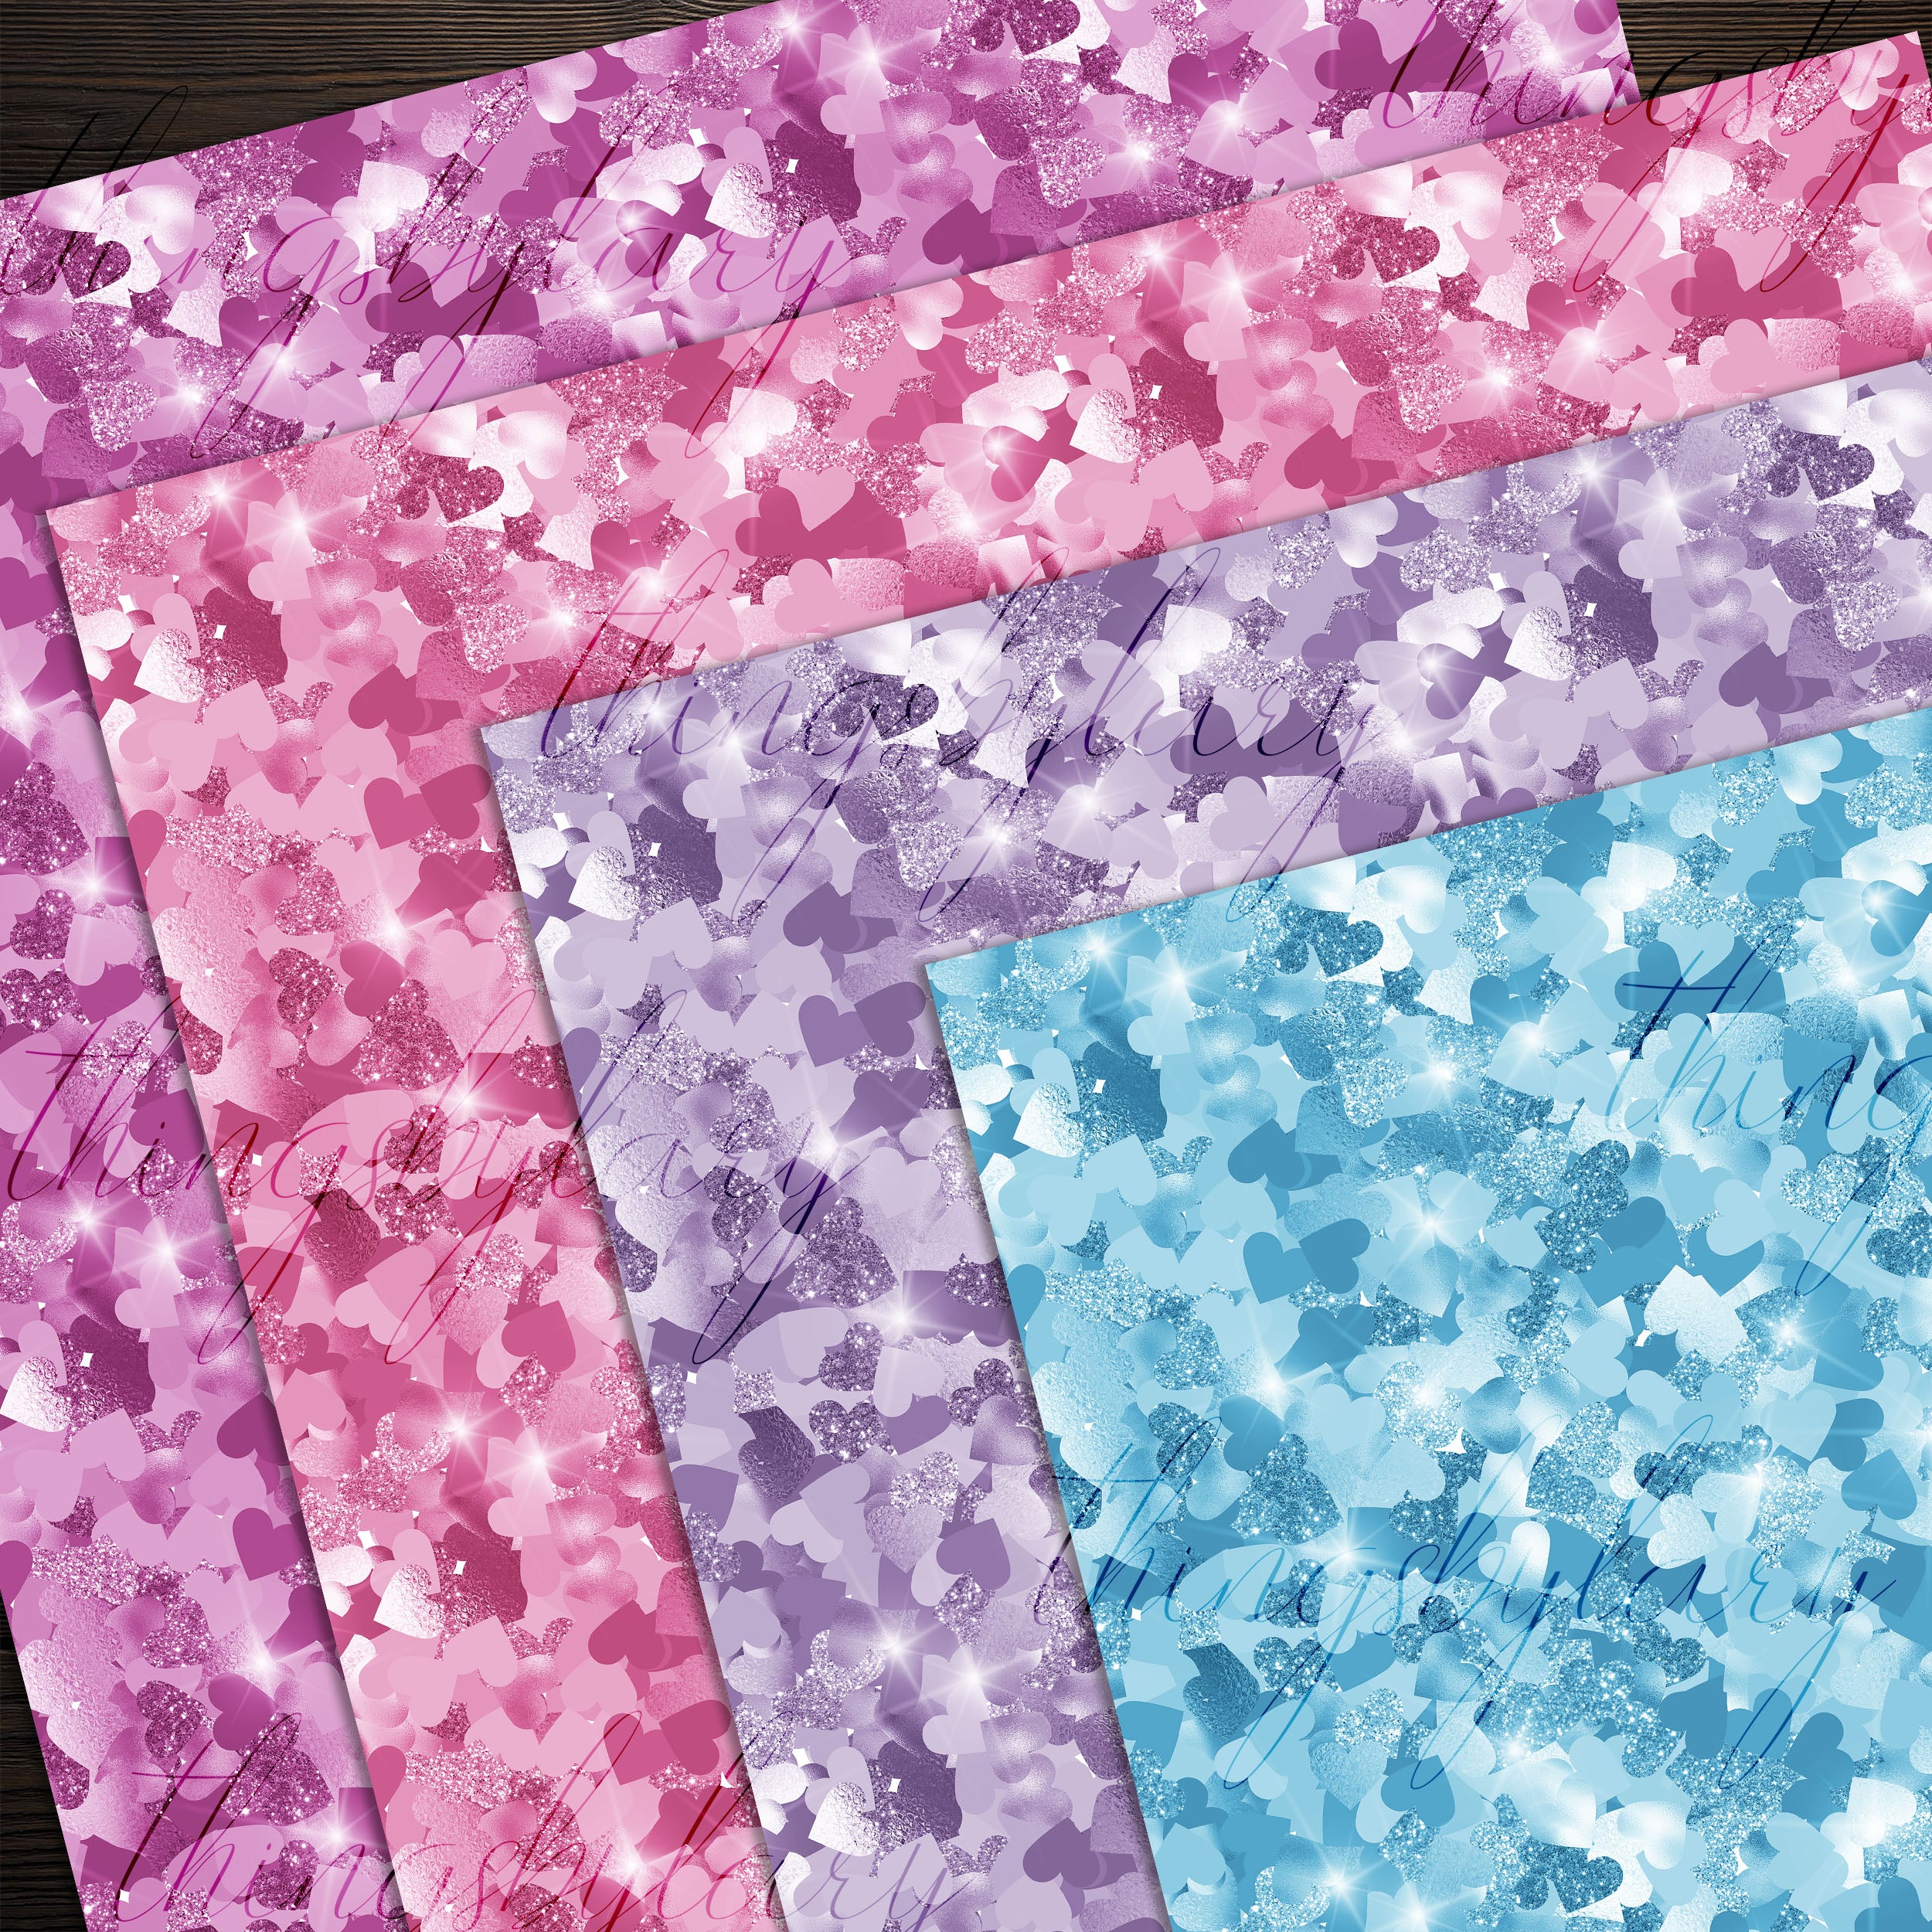 100 Seamless Glitter Hearts Pattern Digital Papers